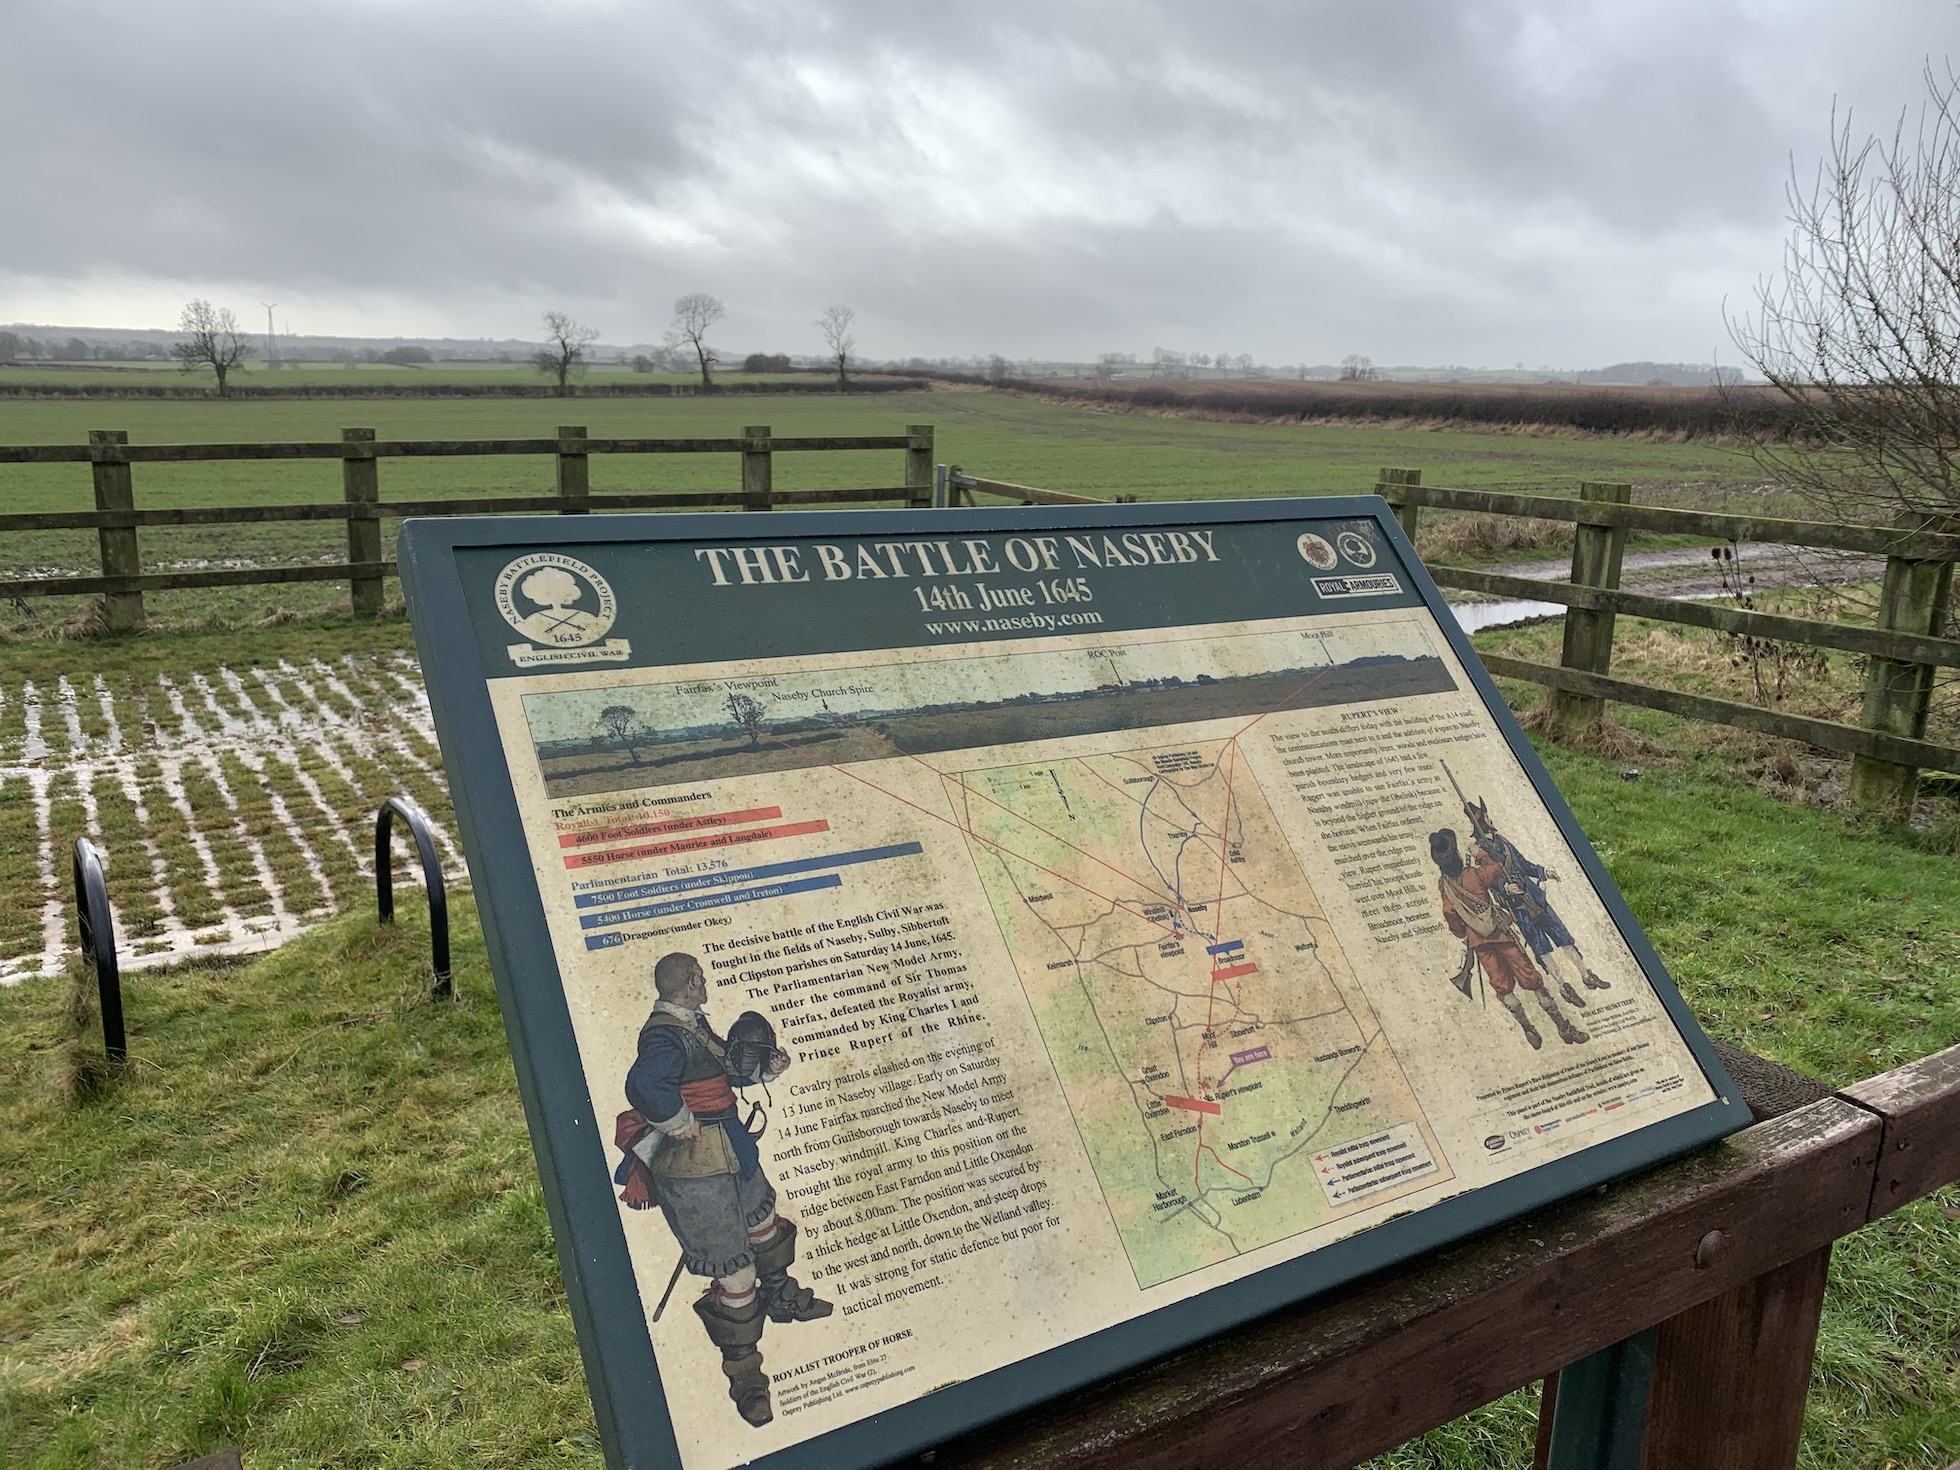 Battle of Naseby - Rupert's View East Farndon - Feb 2021